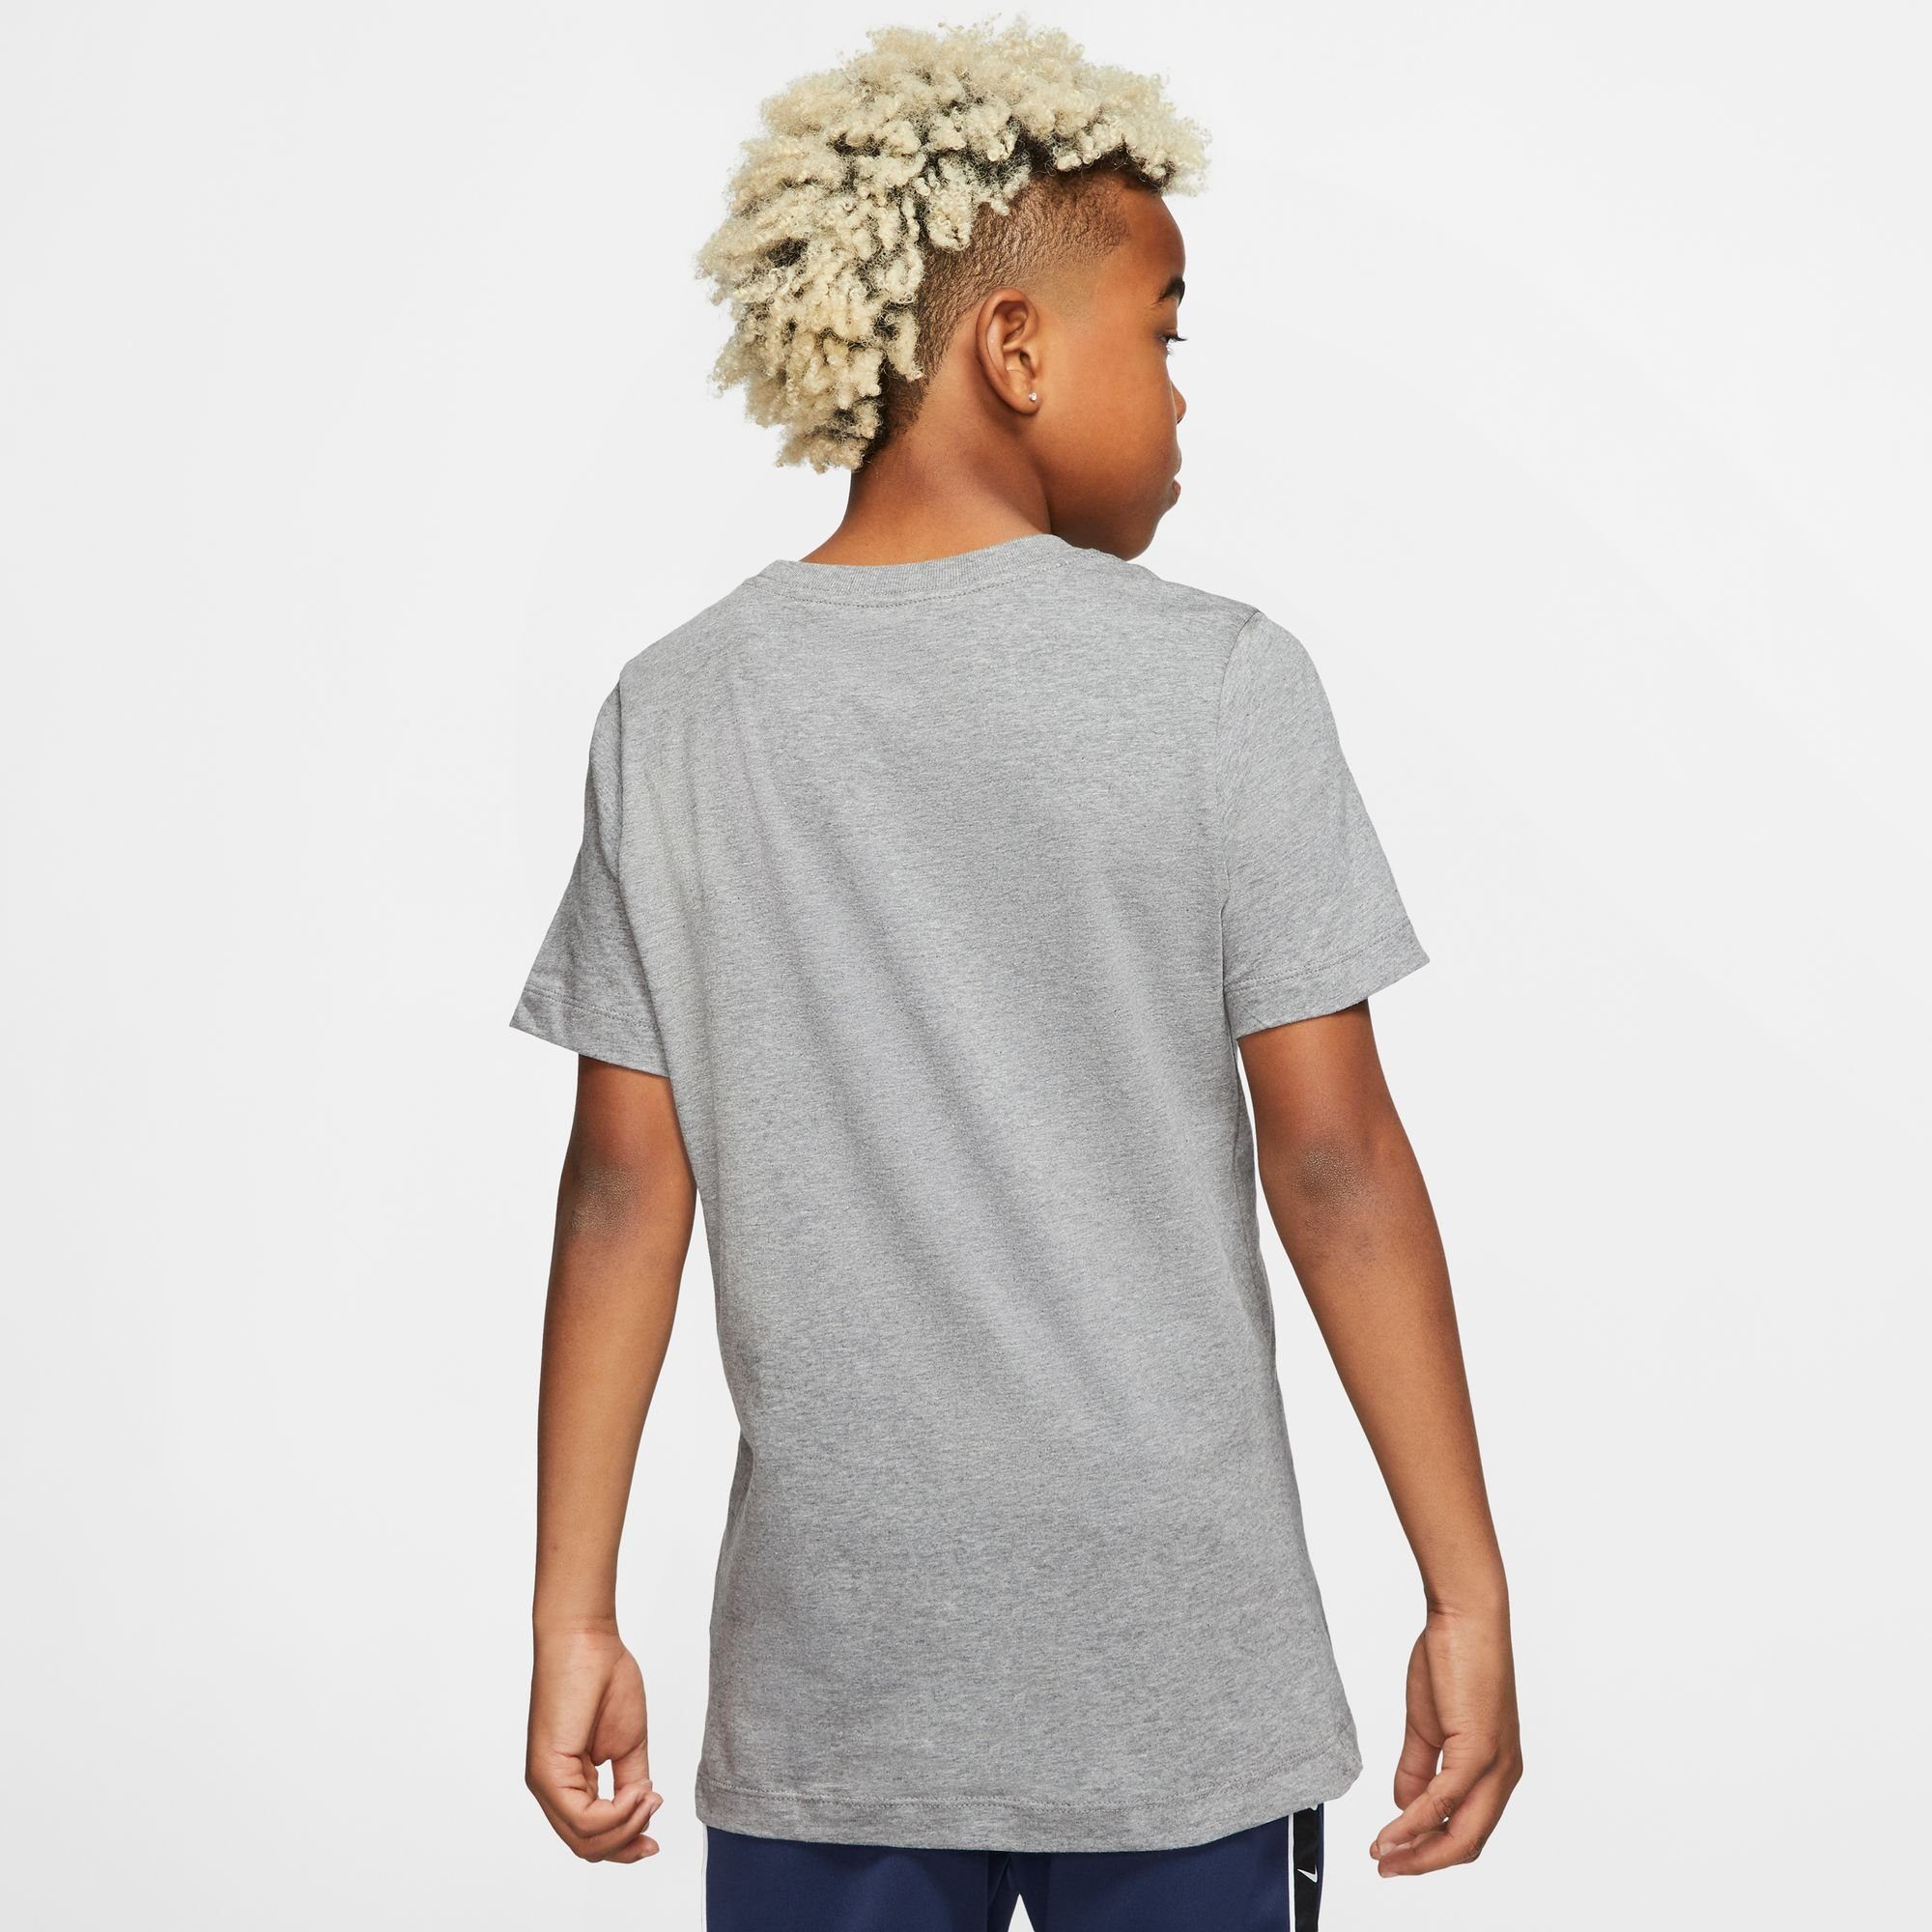 Nike COTTON T-SHIRT KIDS' BIG grau-meliert Sportswear T-Shirt